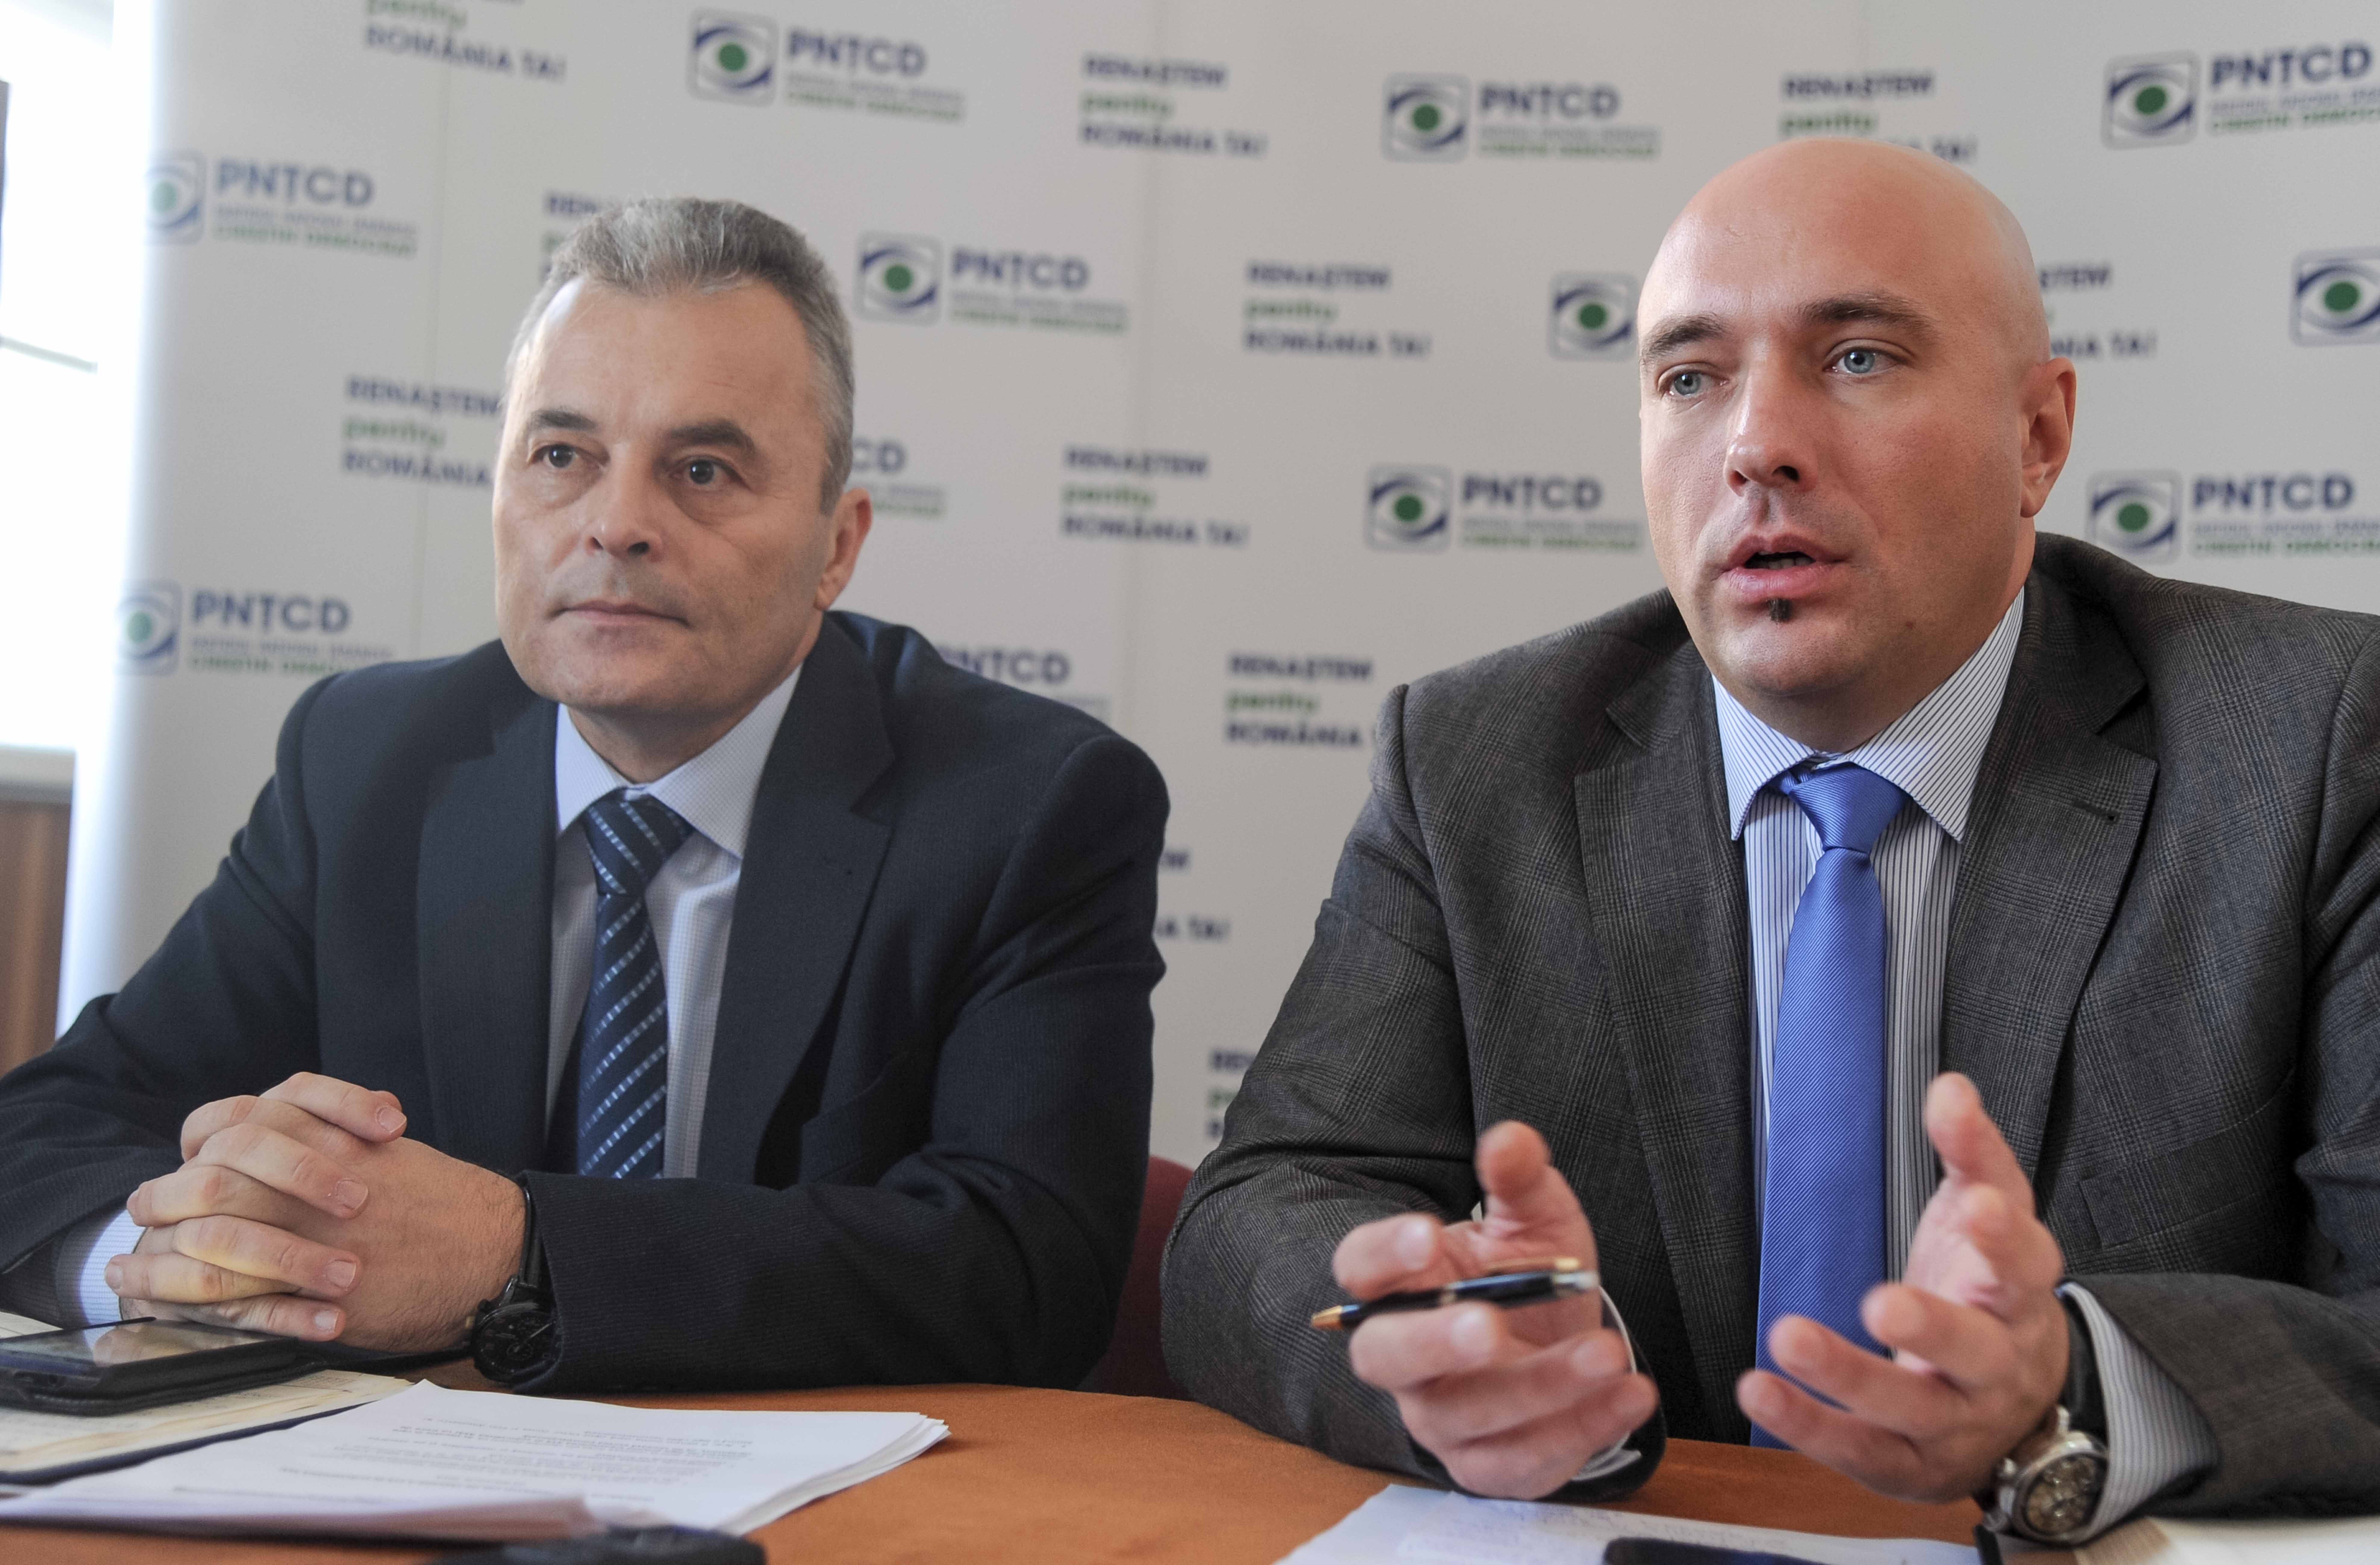 Ciprian Mihok presedinte PNTCD Timisoara, Valentin Moldovan presedinte PNTCD Timis (6)